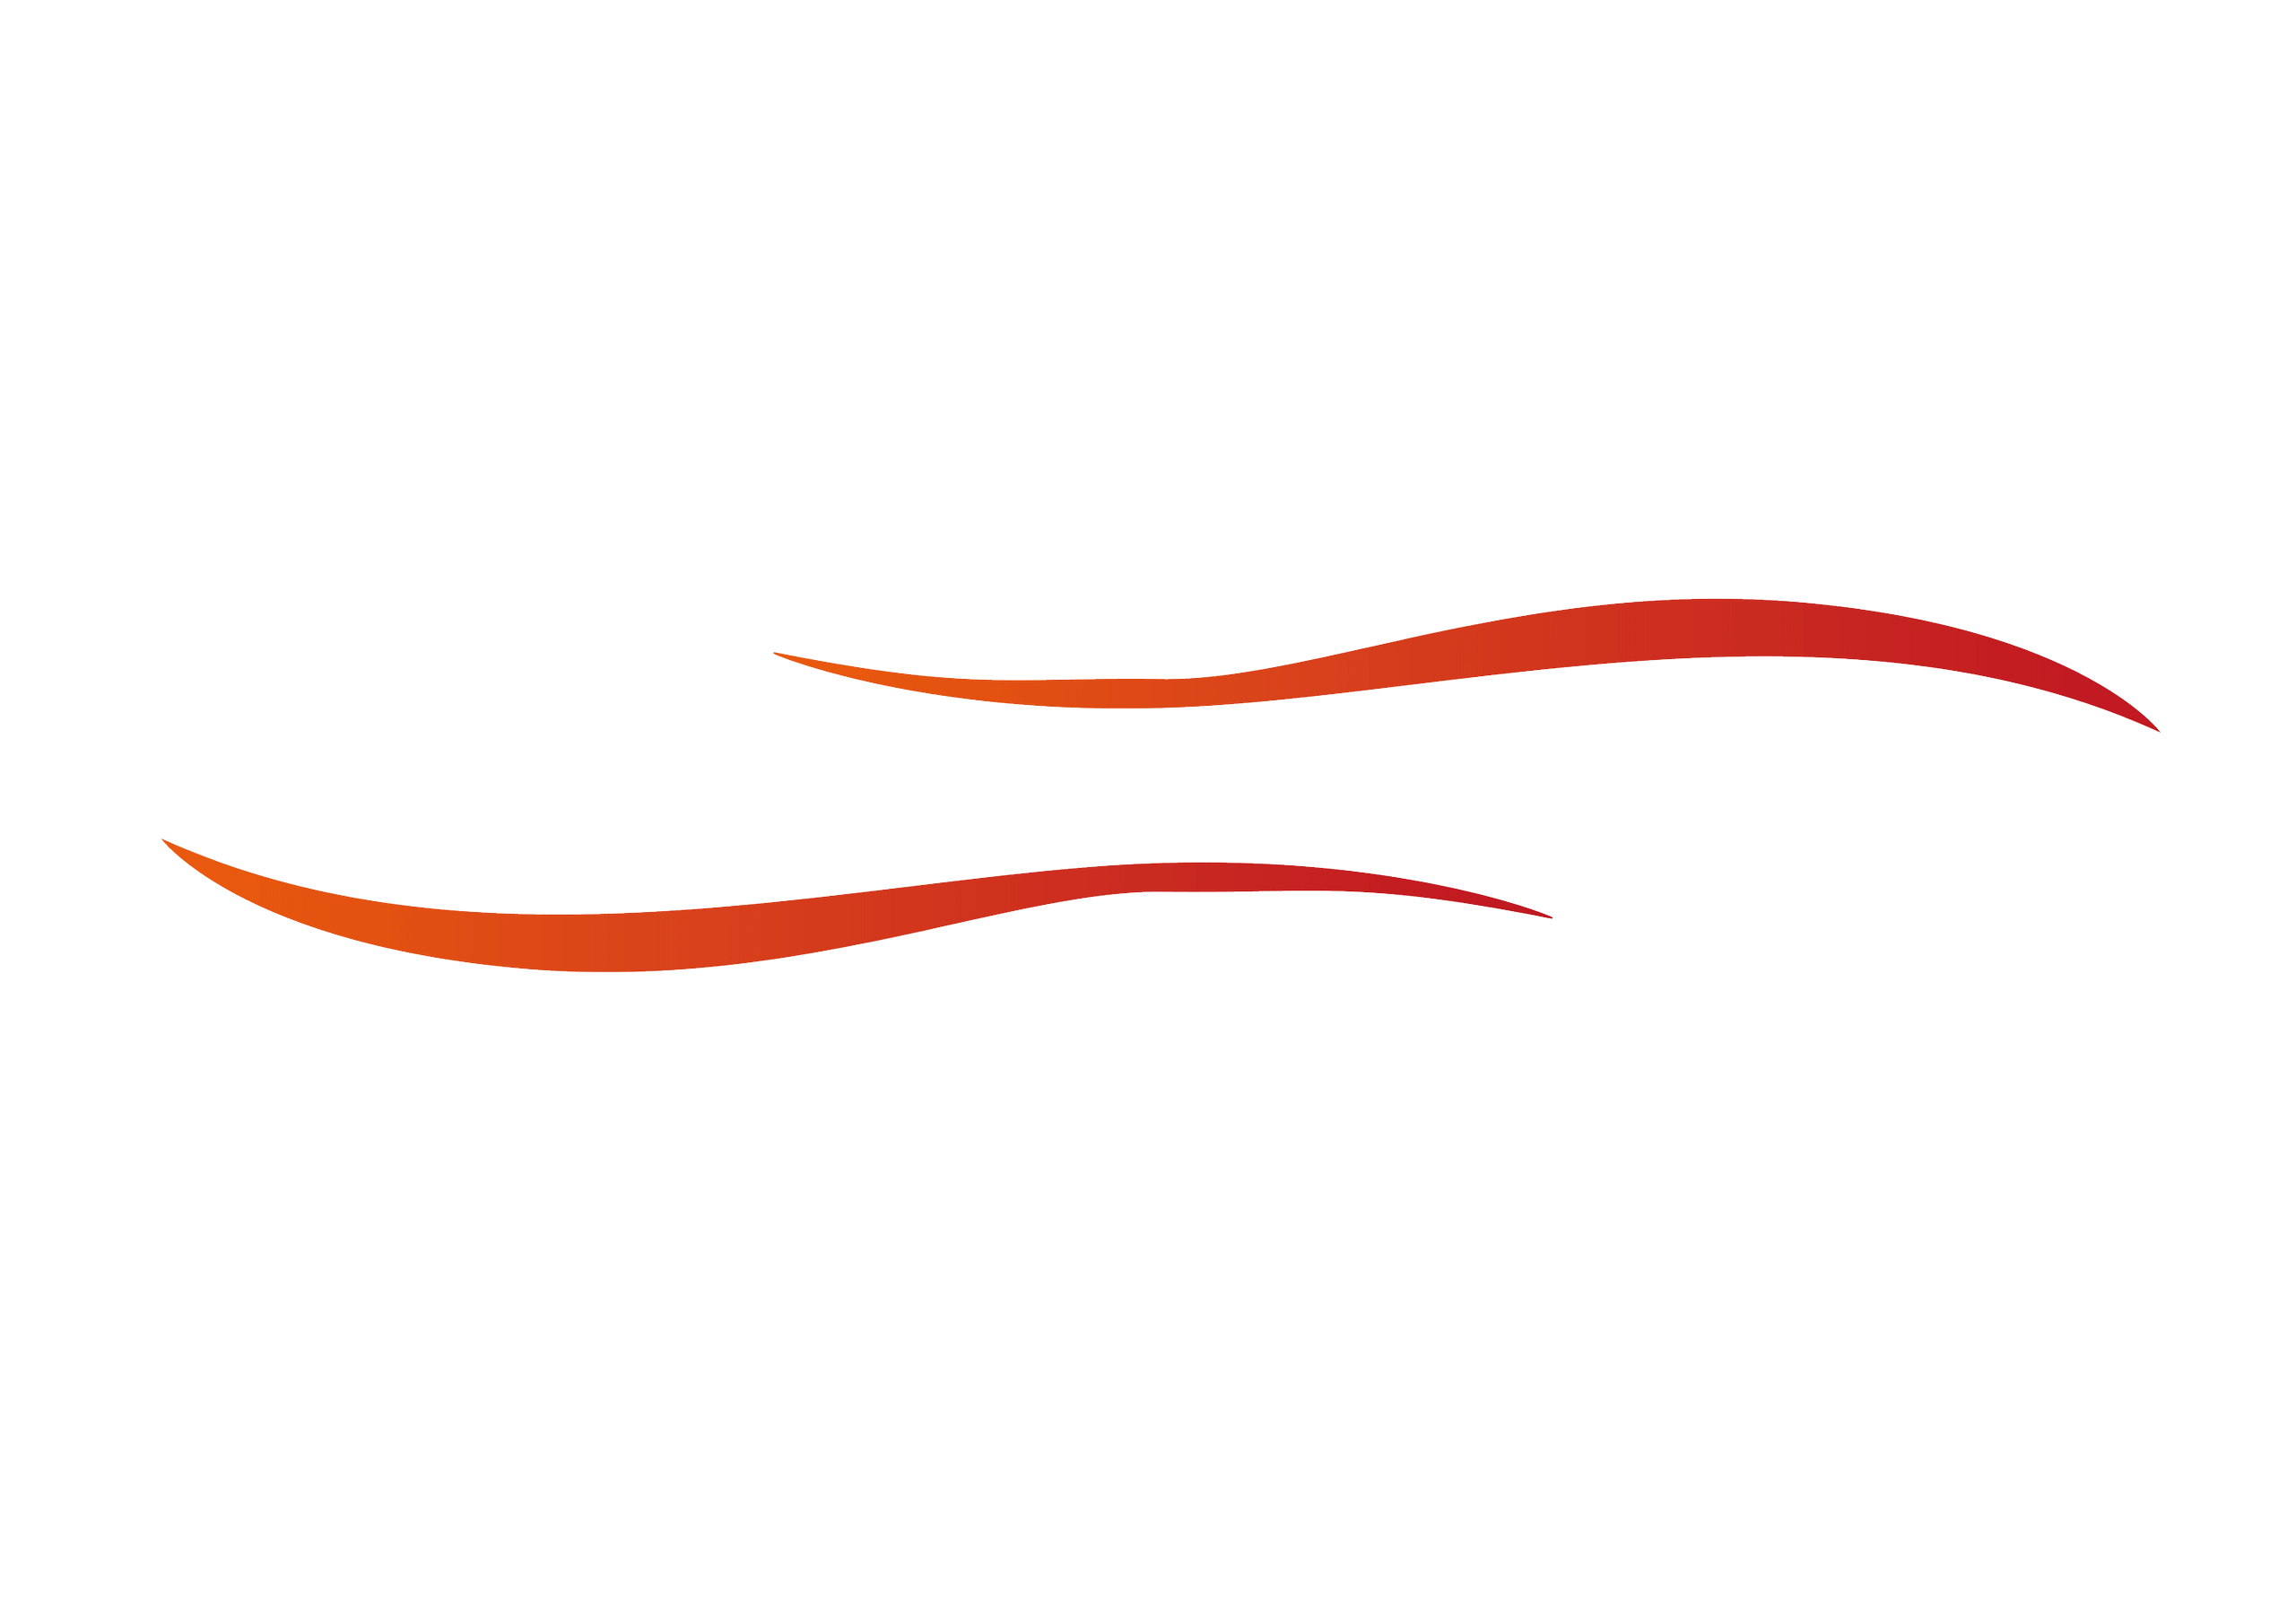 ERAUTO RENTAL CAR